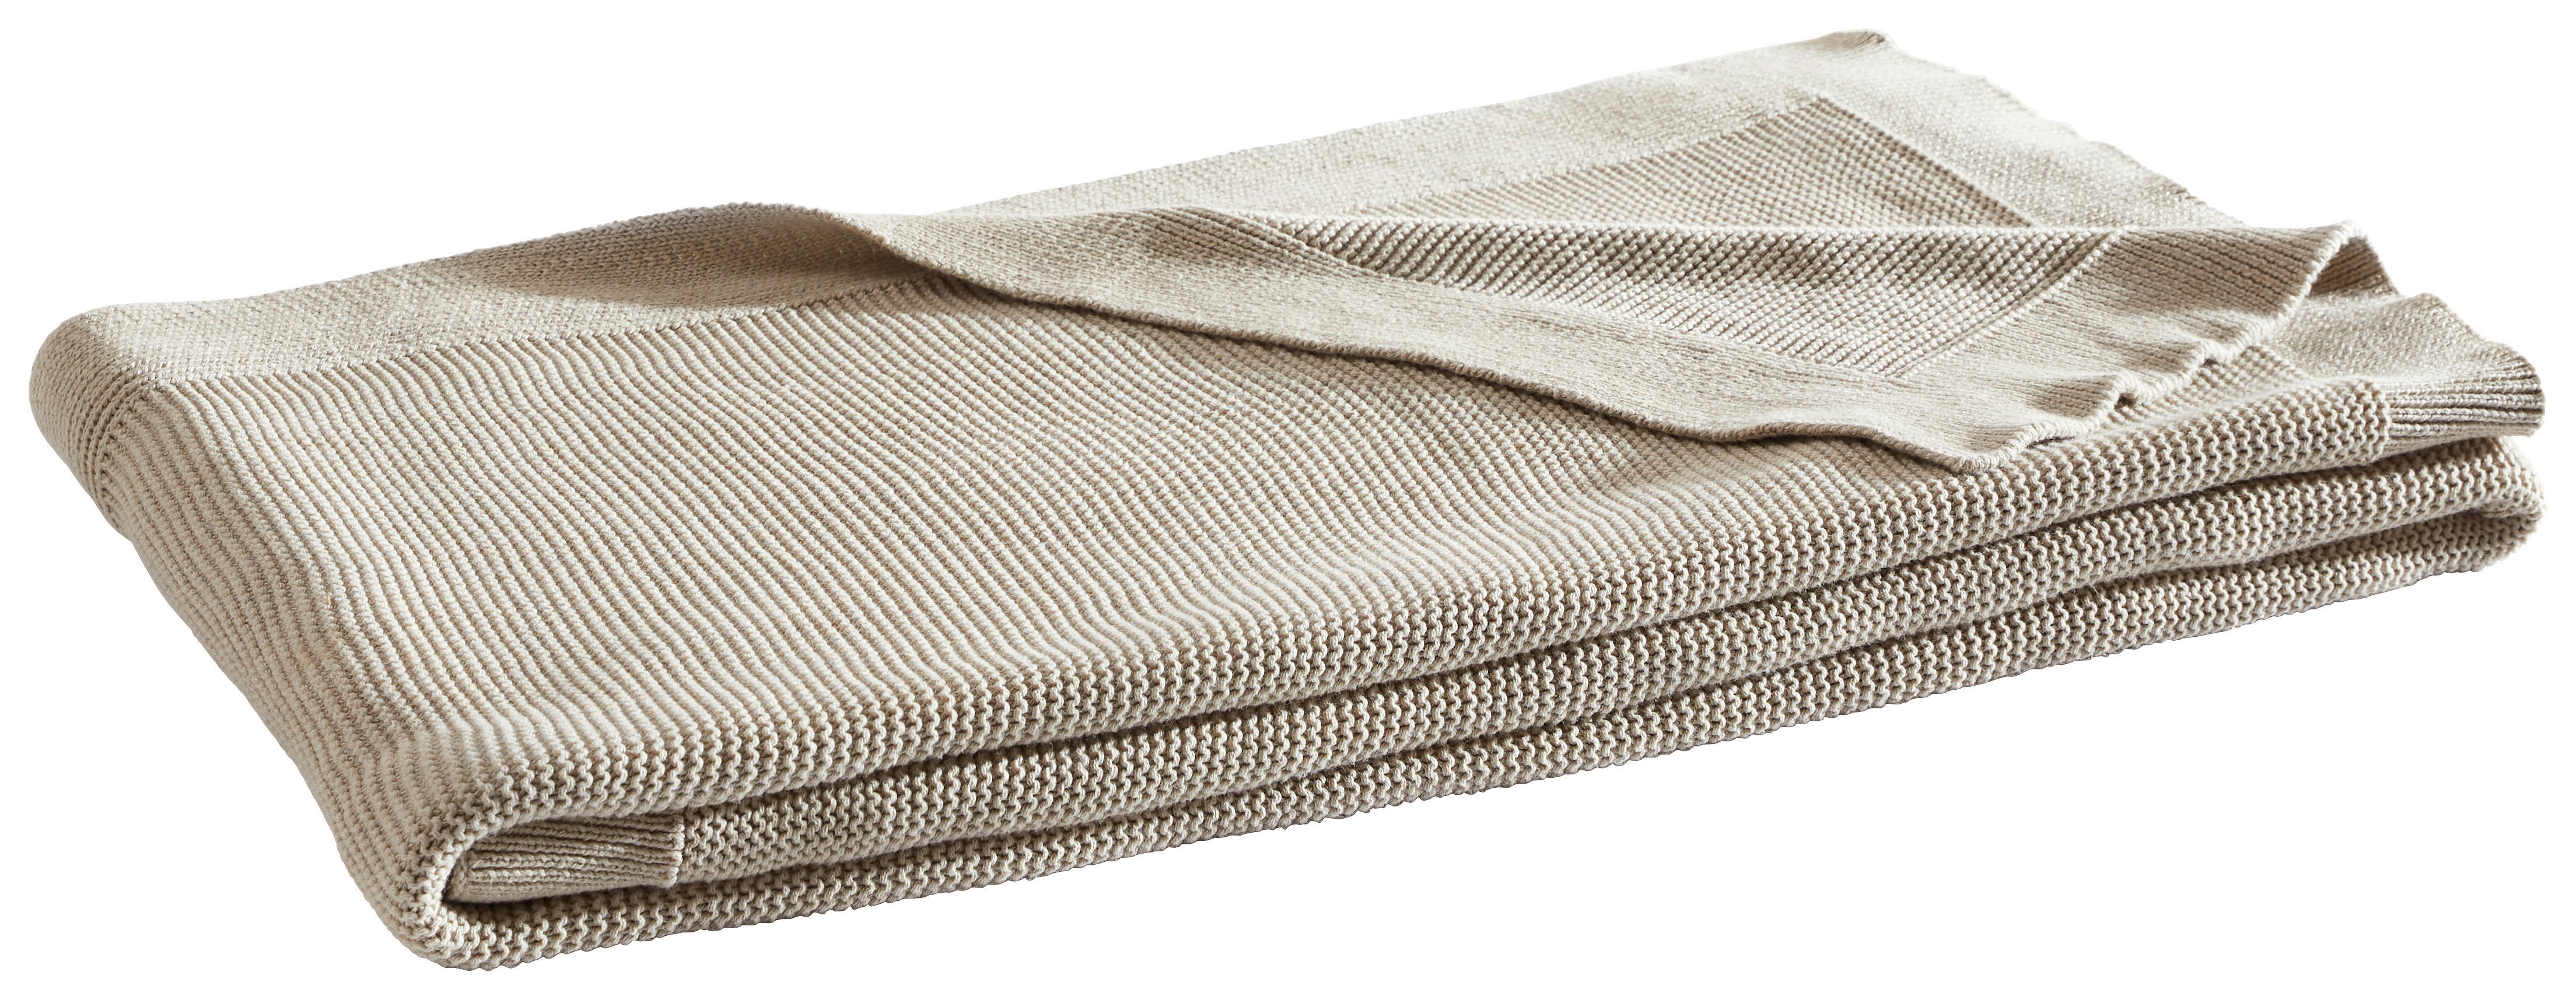 WOHNDECKE BEJA 150/200 cm  - Sandfarben, Basics, Textil (150/200cm) - Dieter Knoll